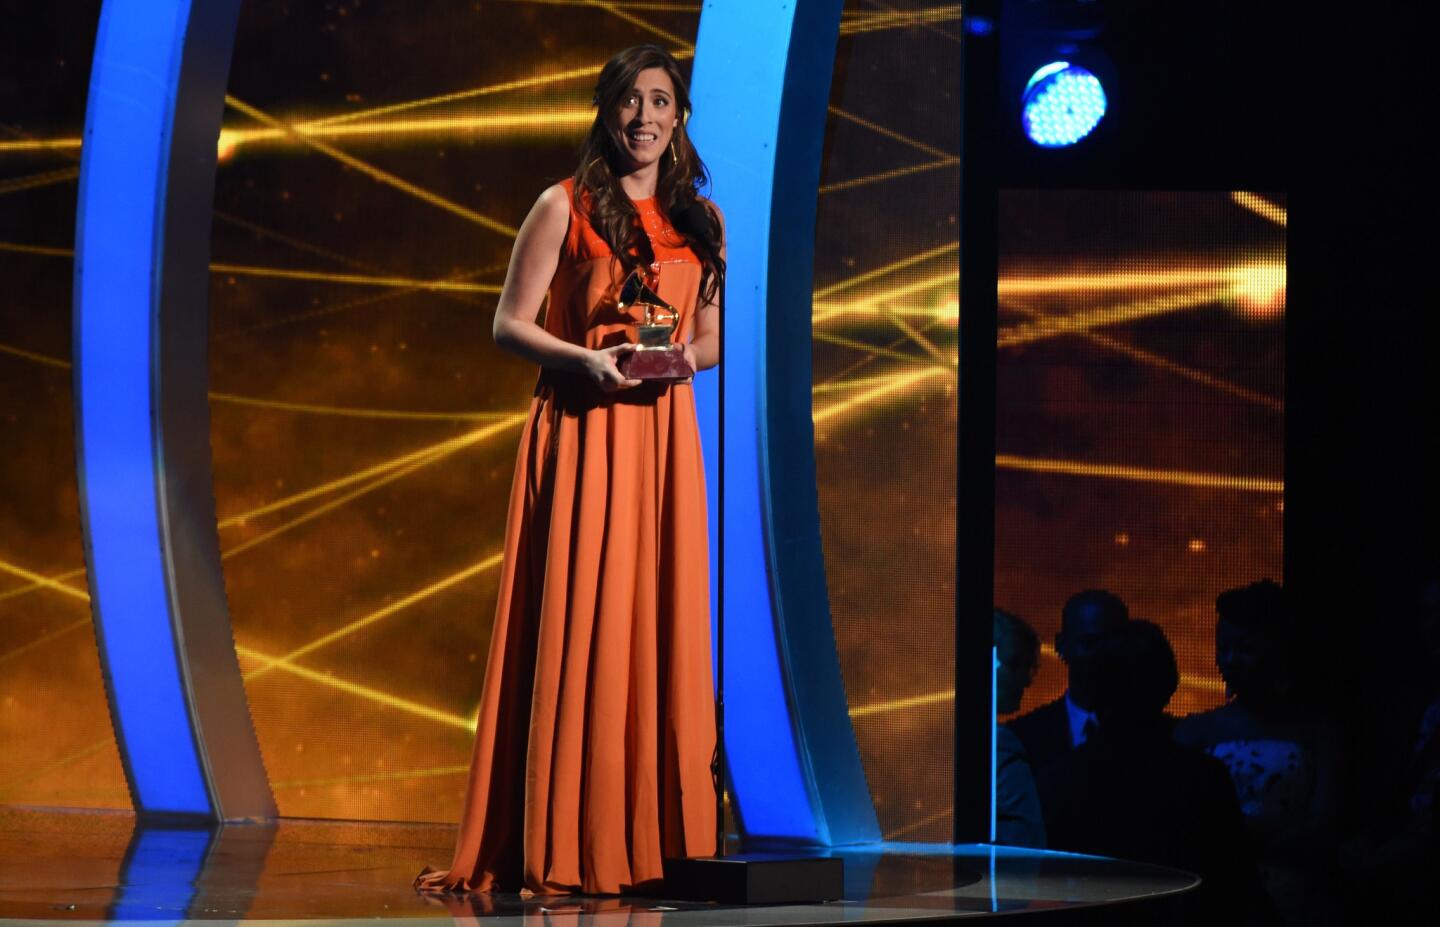 Latin Grammy Awards 2014 | Show highlights